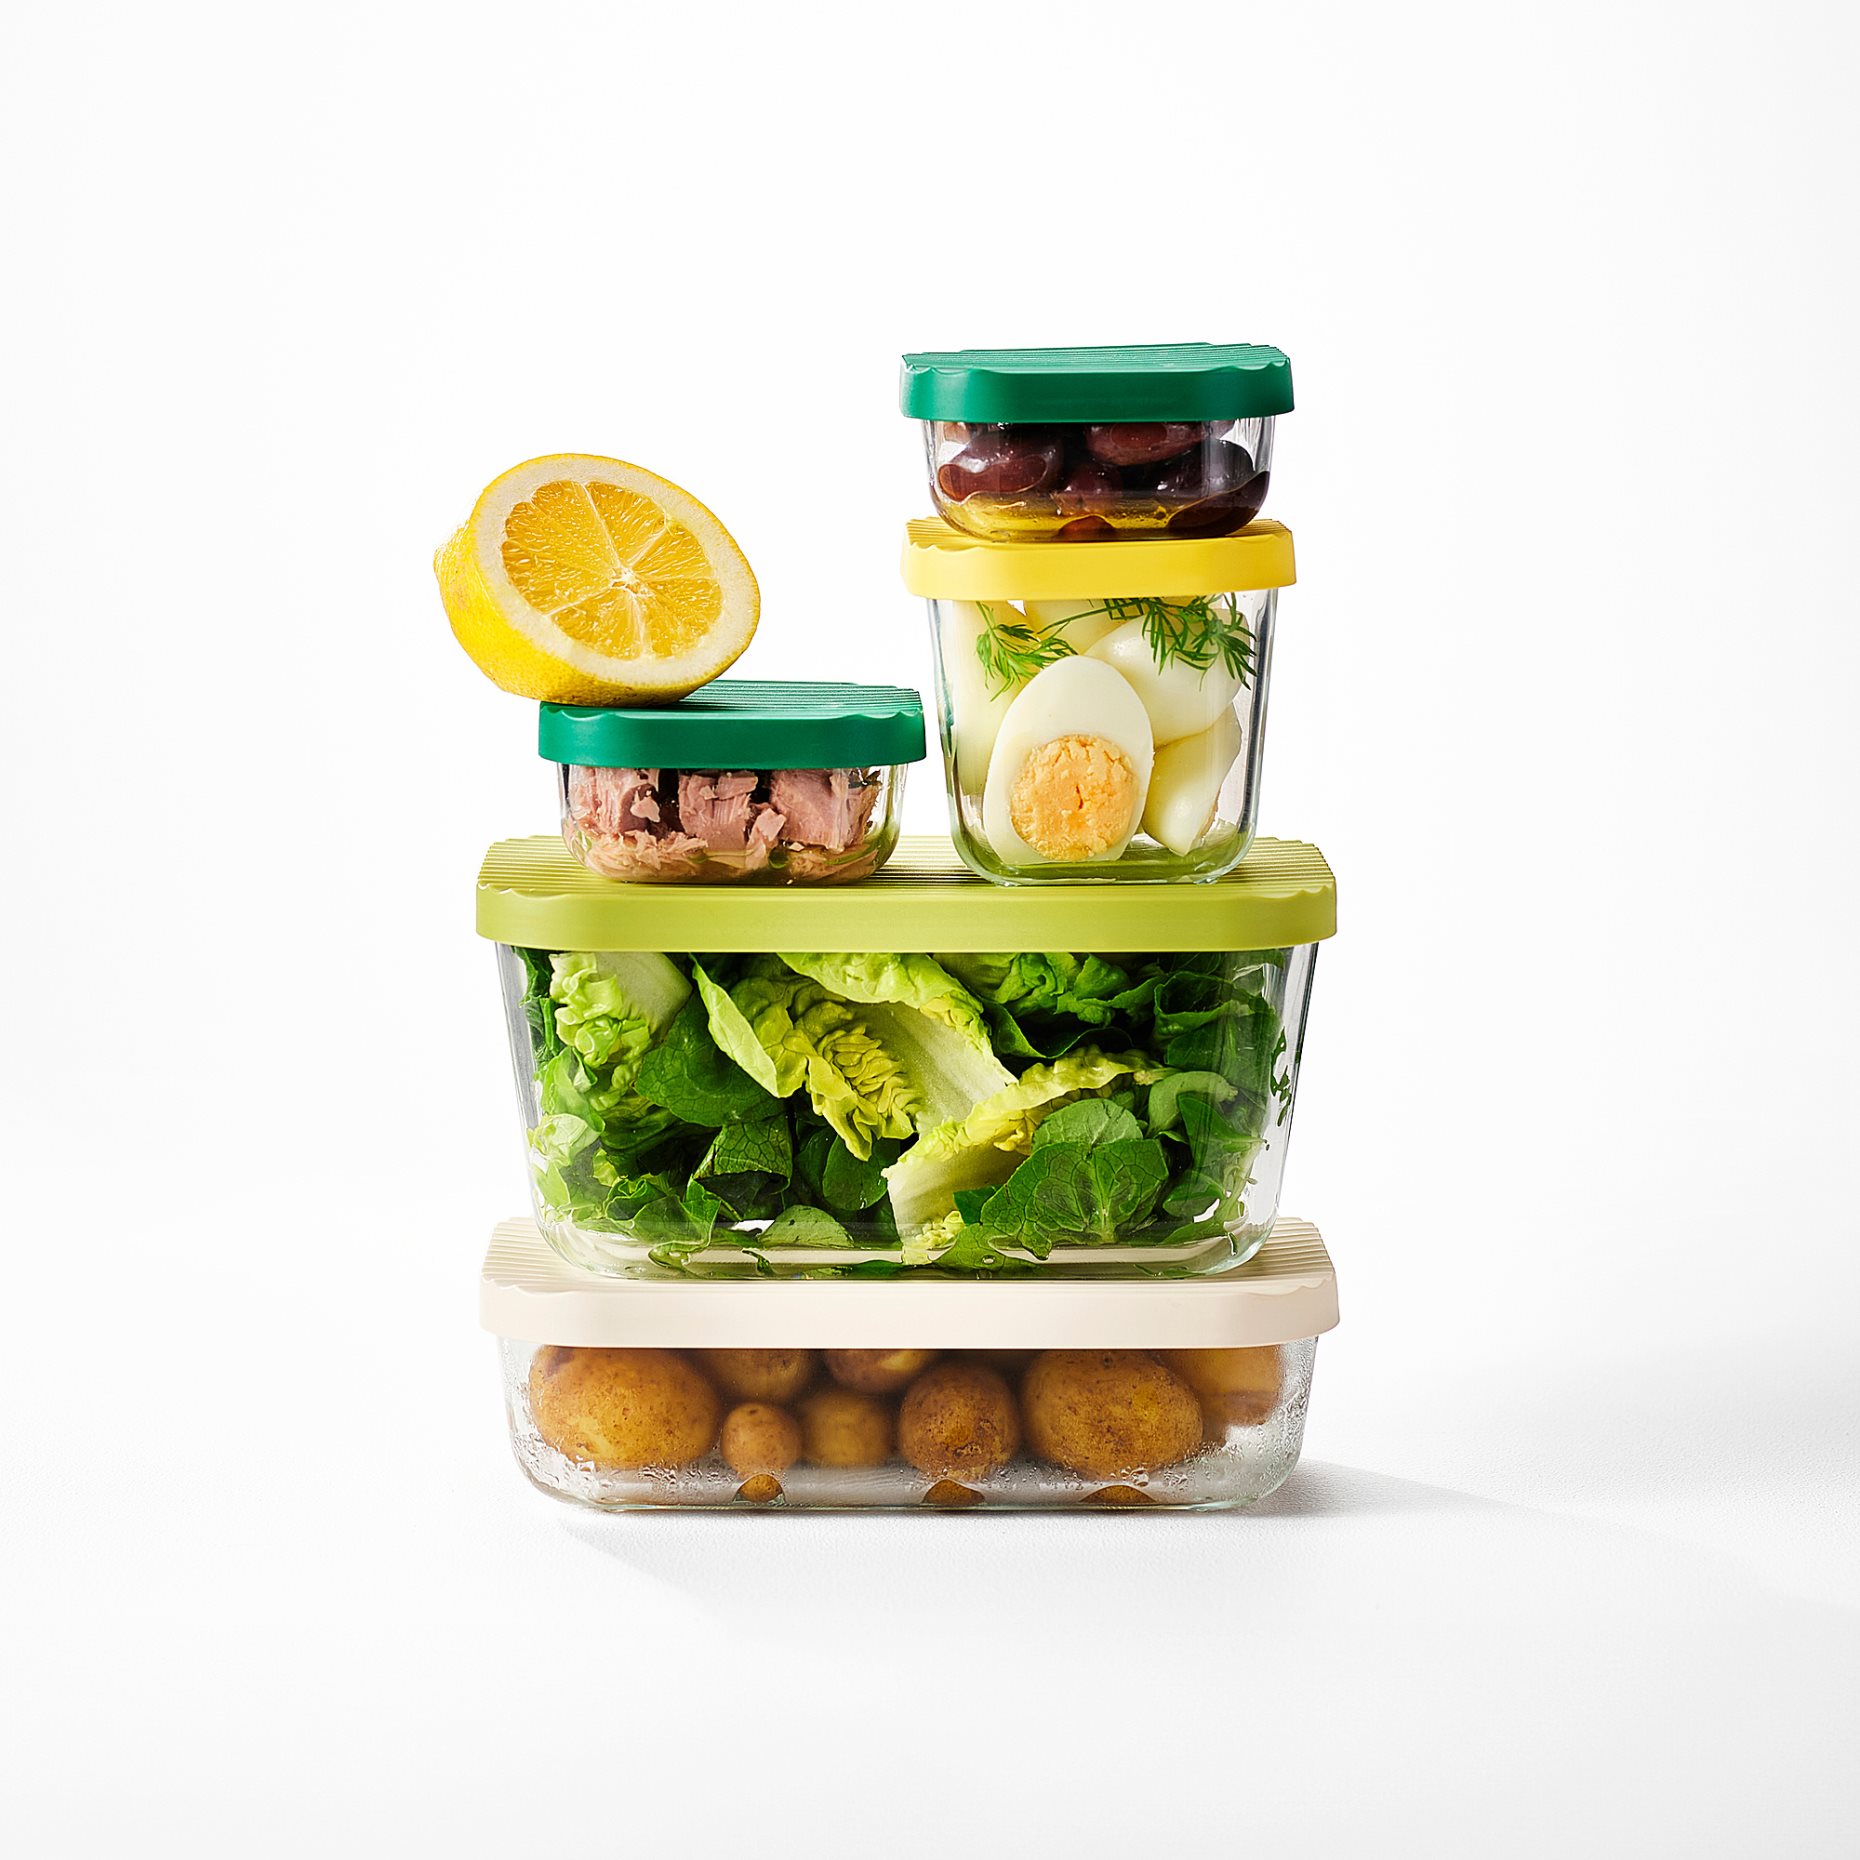 HAVSTOBIS, food container with lid, set of 5, 305.592.75